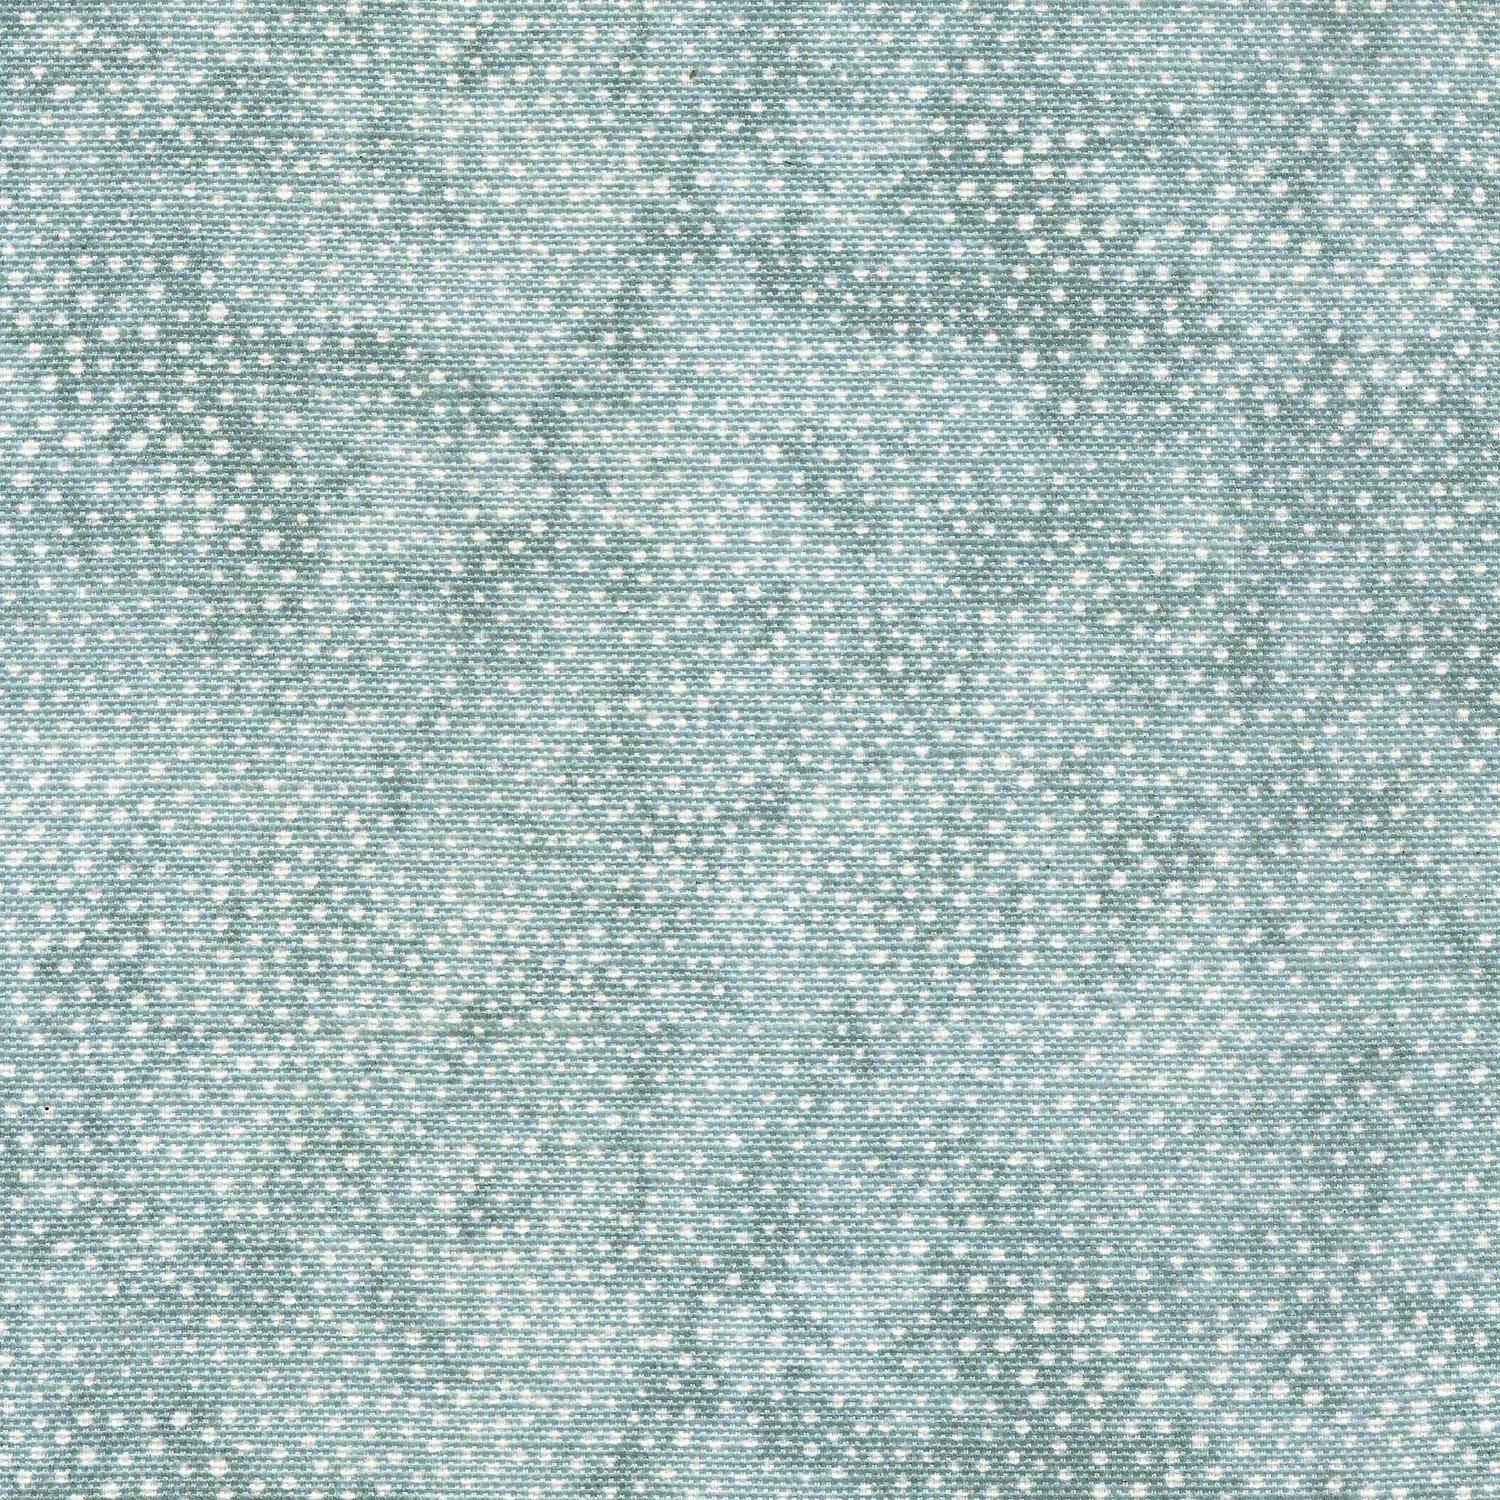 Textile-Medium for the Serviette Technique 50ml — Hobby Art Chemaco